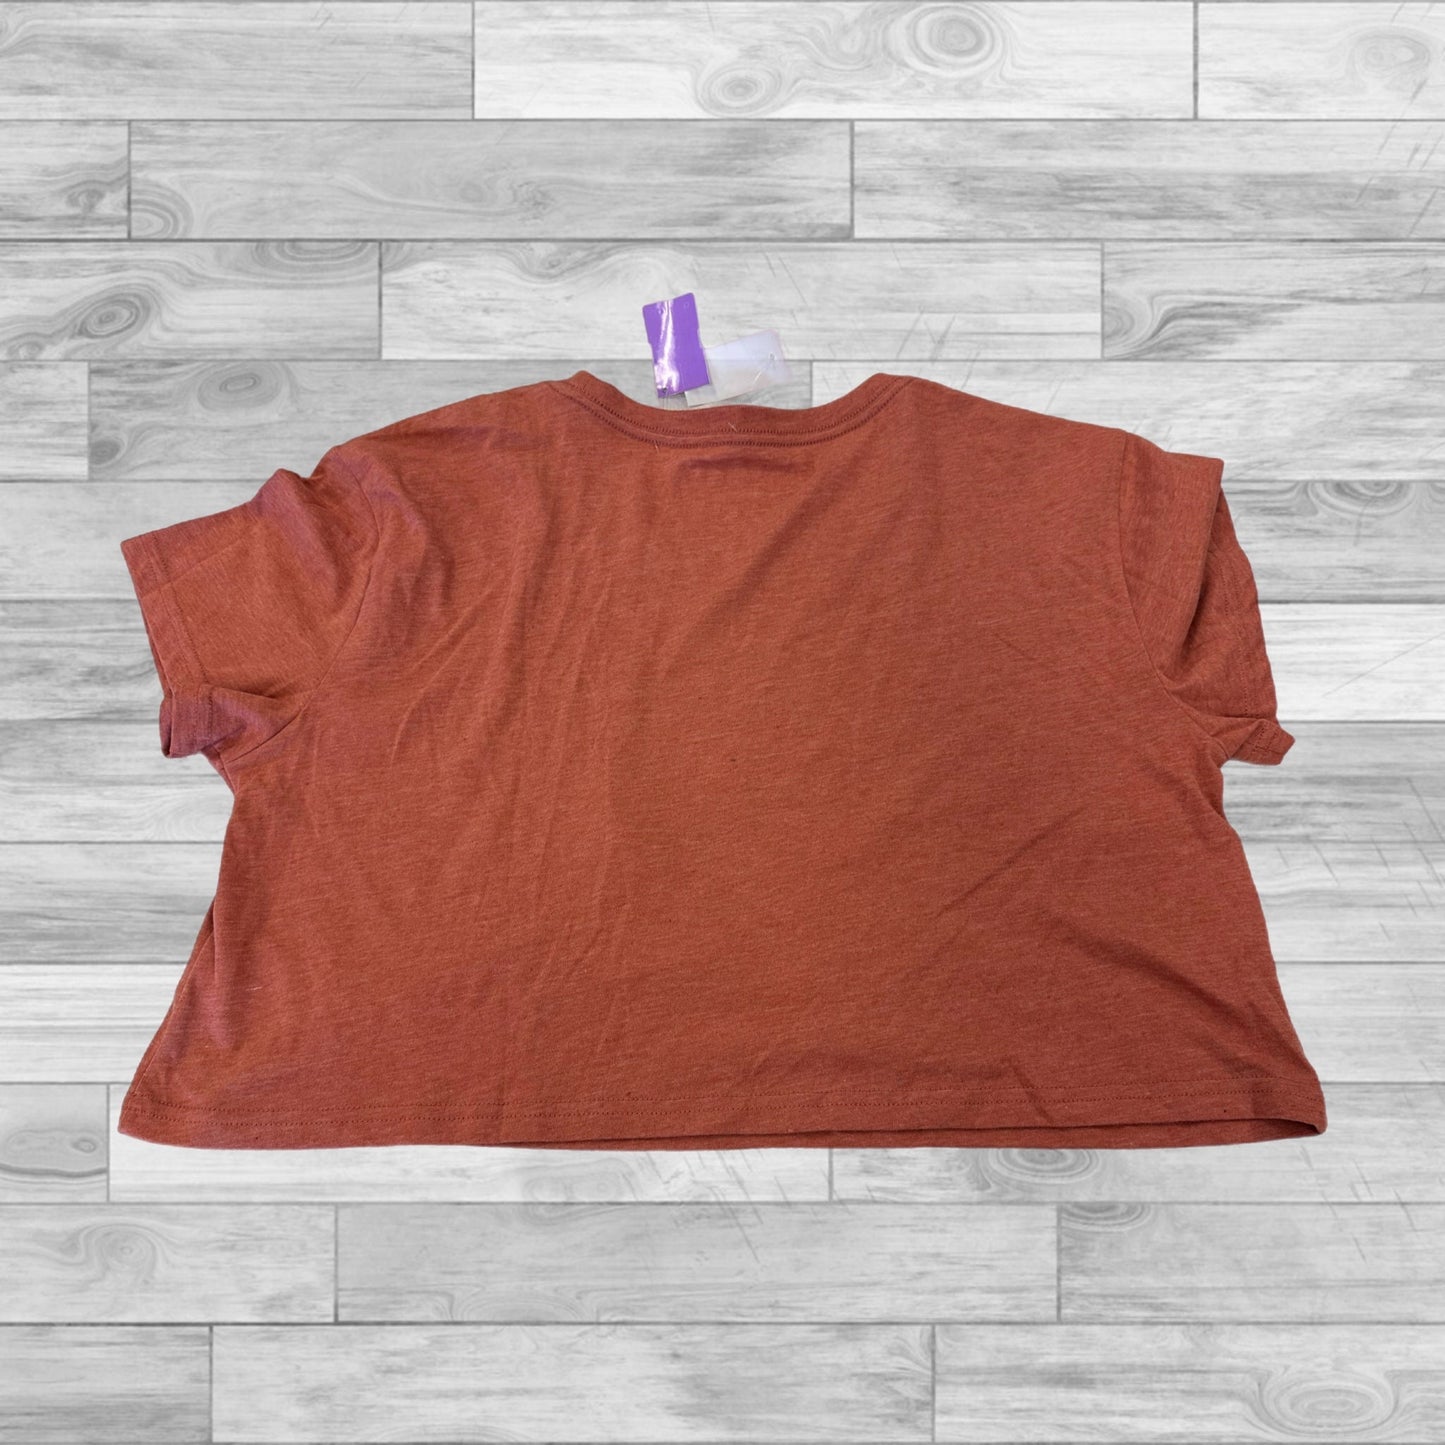 Orange Top Short Sleeve Basic Wrangler, Size L